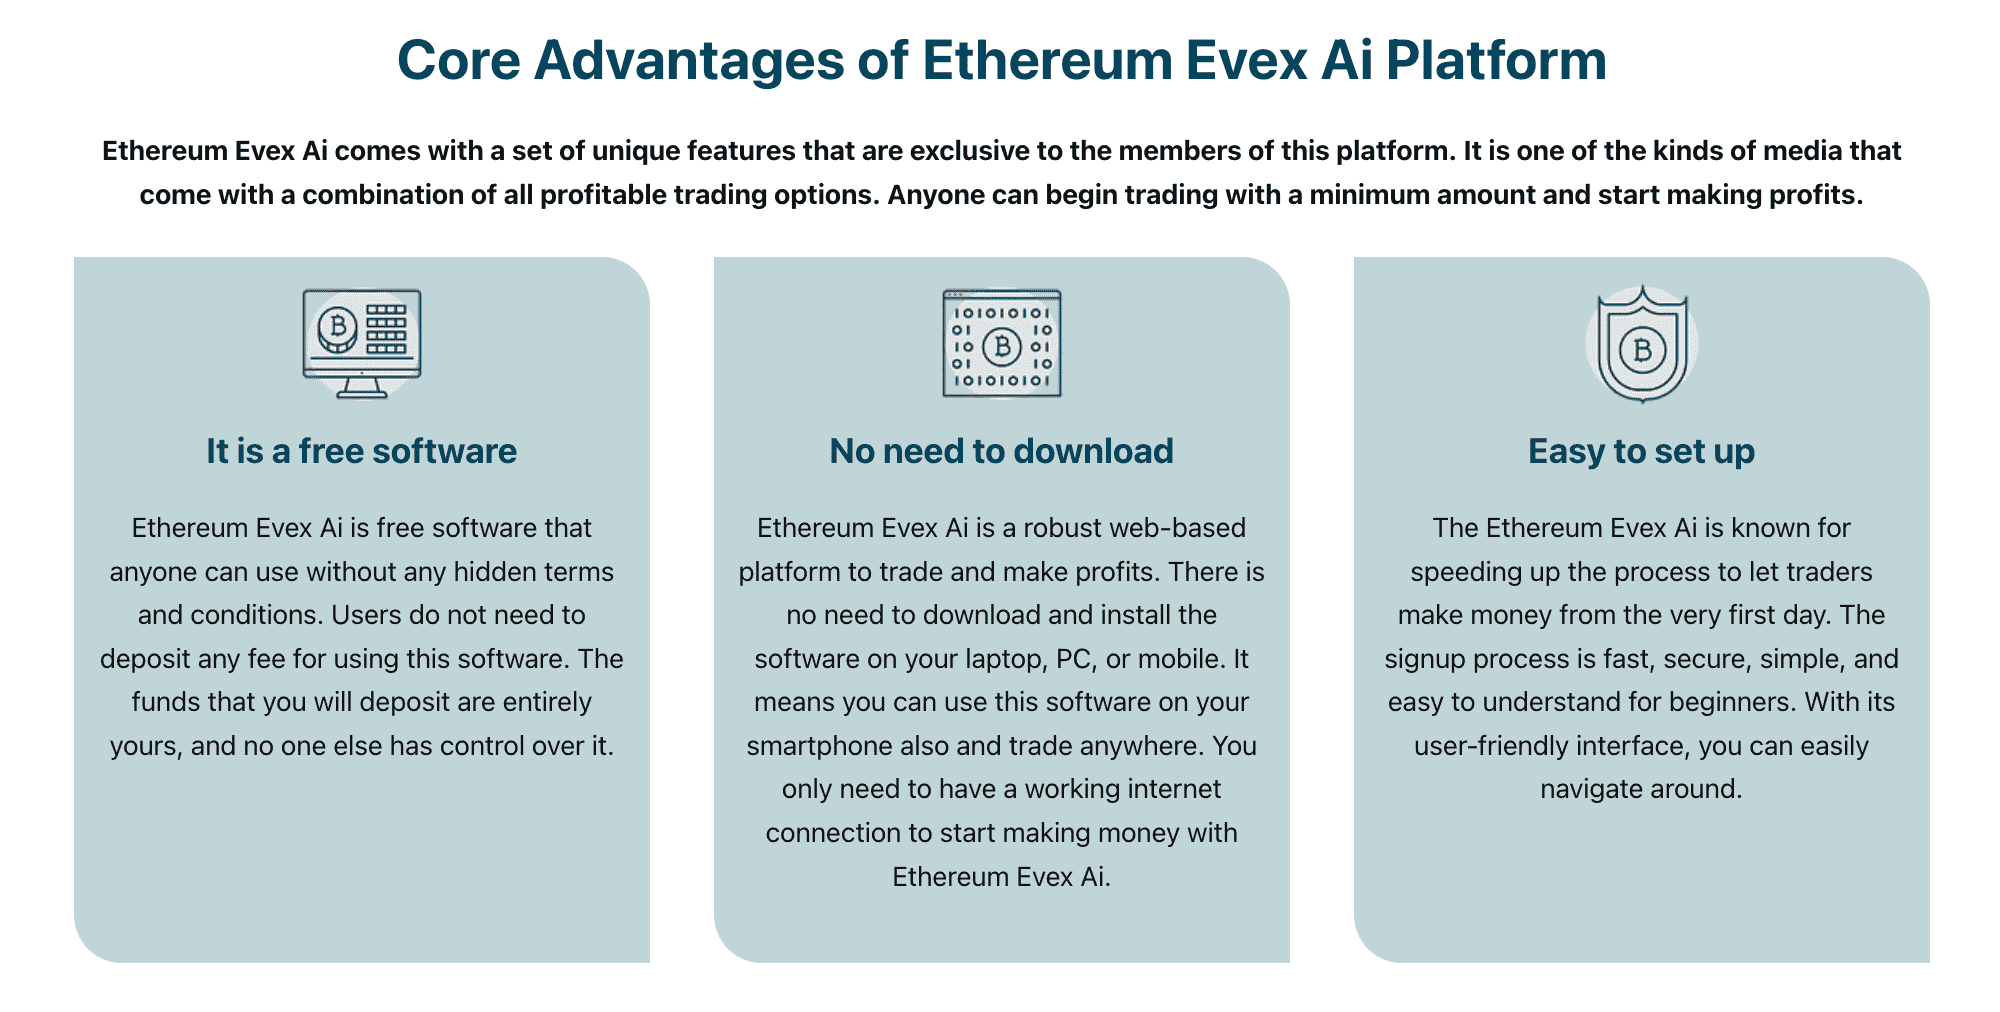 Osnovne prednosti Ethereum Evex Ai platforme  